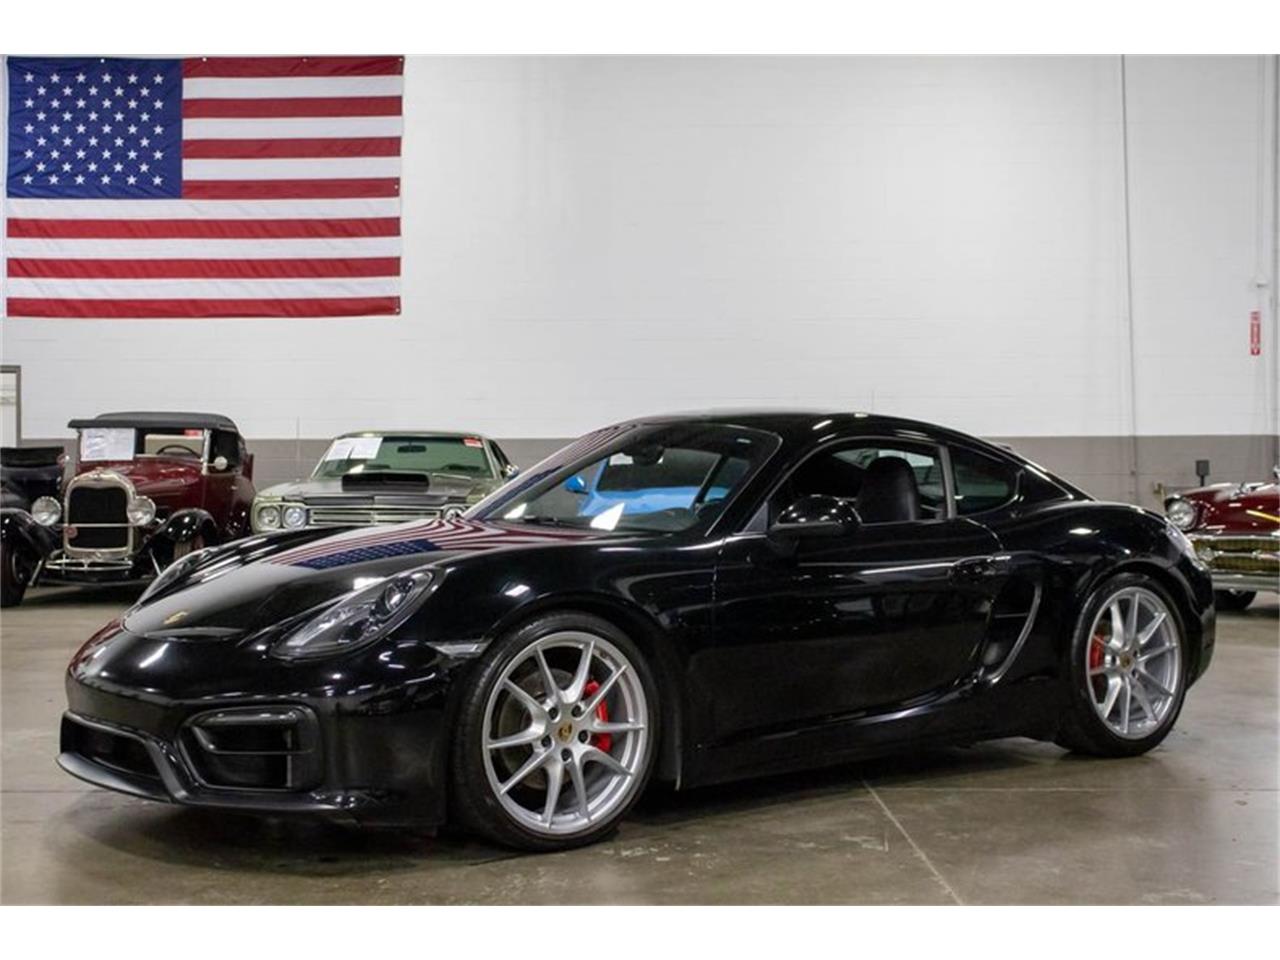 For Sale: 2016 Porsche Cayman in Ken2od, Michigan for sale in Grand Rapids, MI